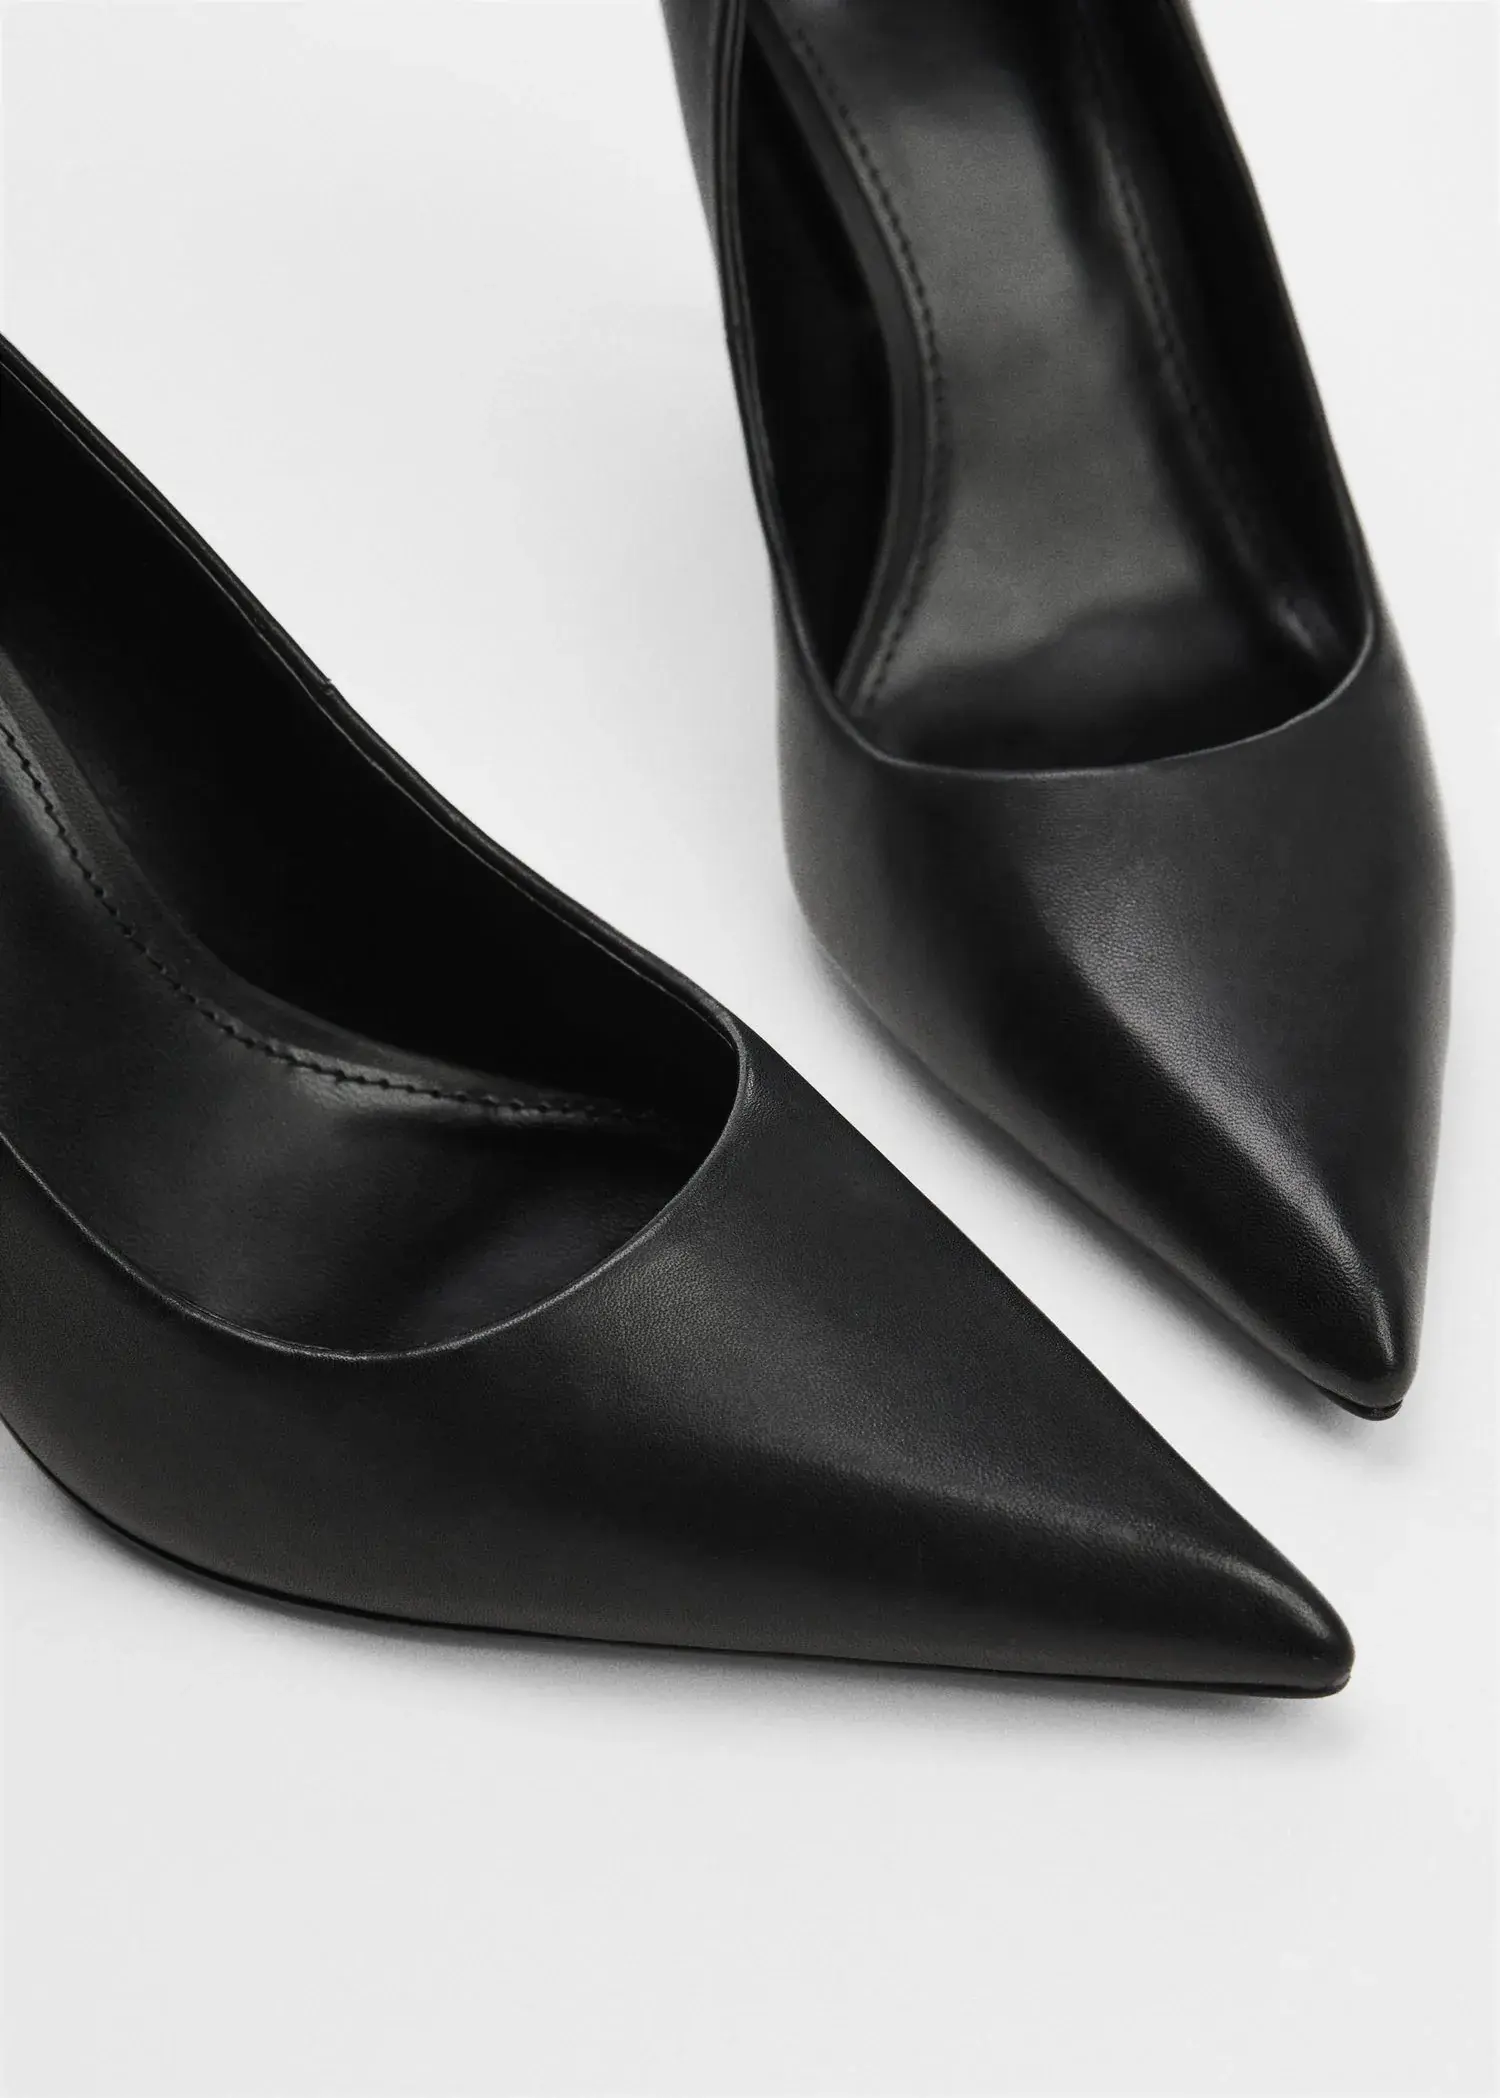 Mango Heel leather shoes. 3